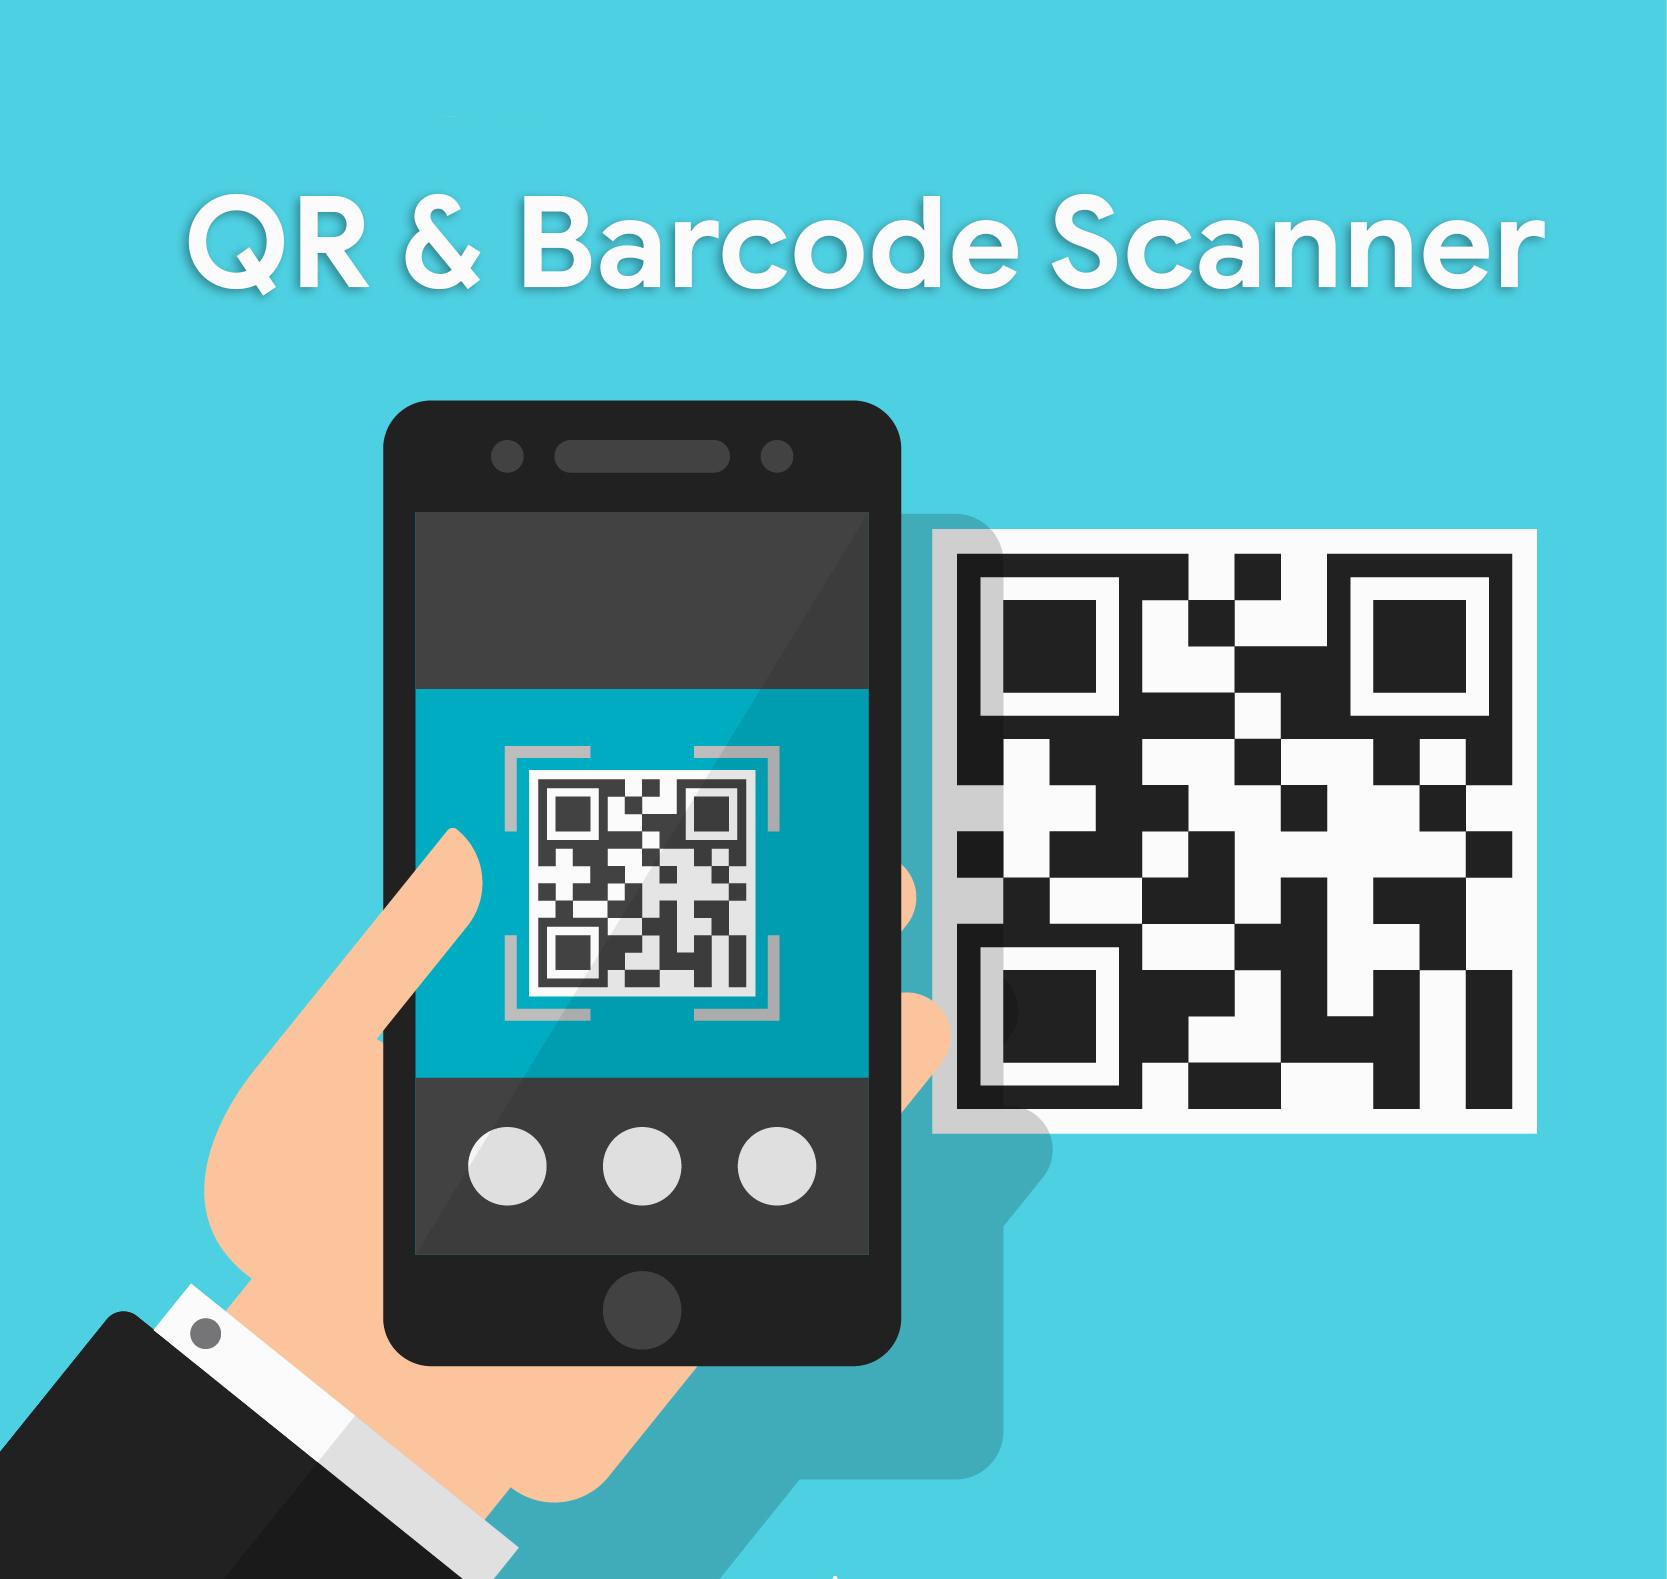 Мини qr код. QR код. Сканировать QR код. QR код мобильный телефон. Телефон сканирует QR код.